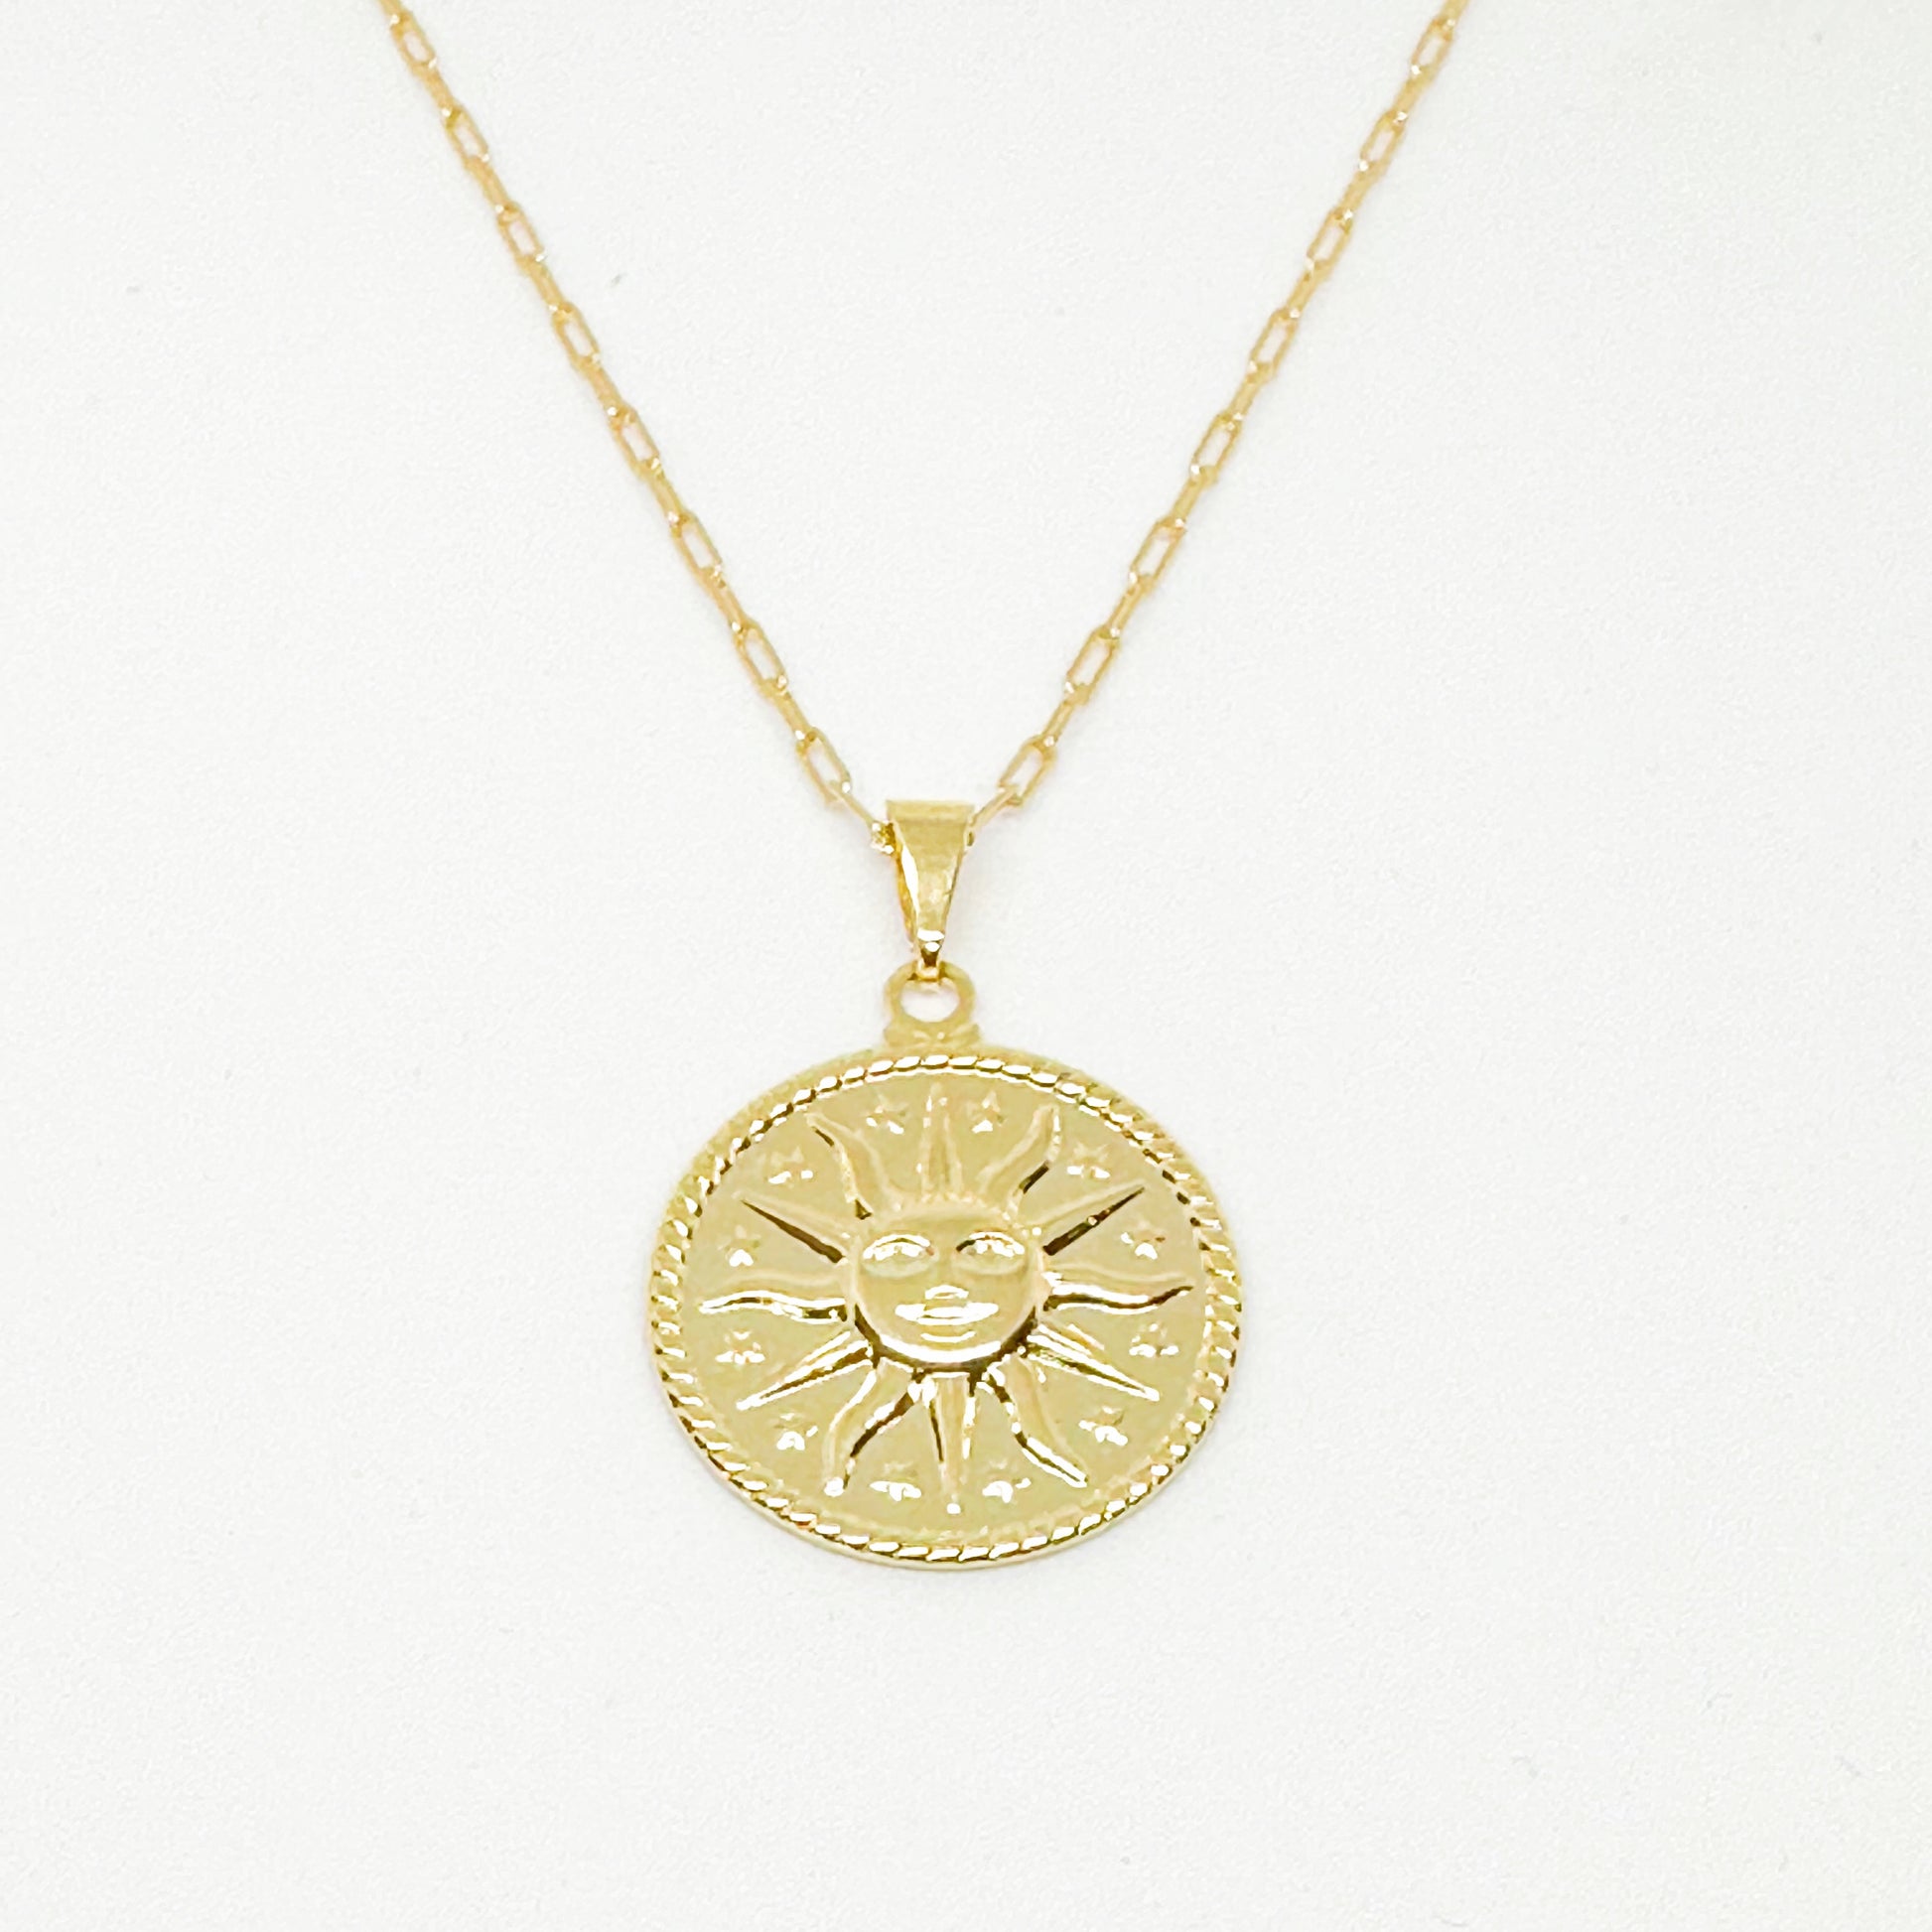 Gold filled sun medallion necklace